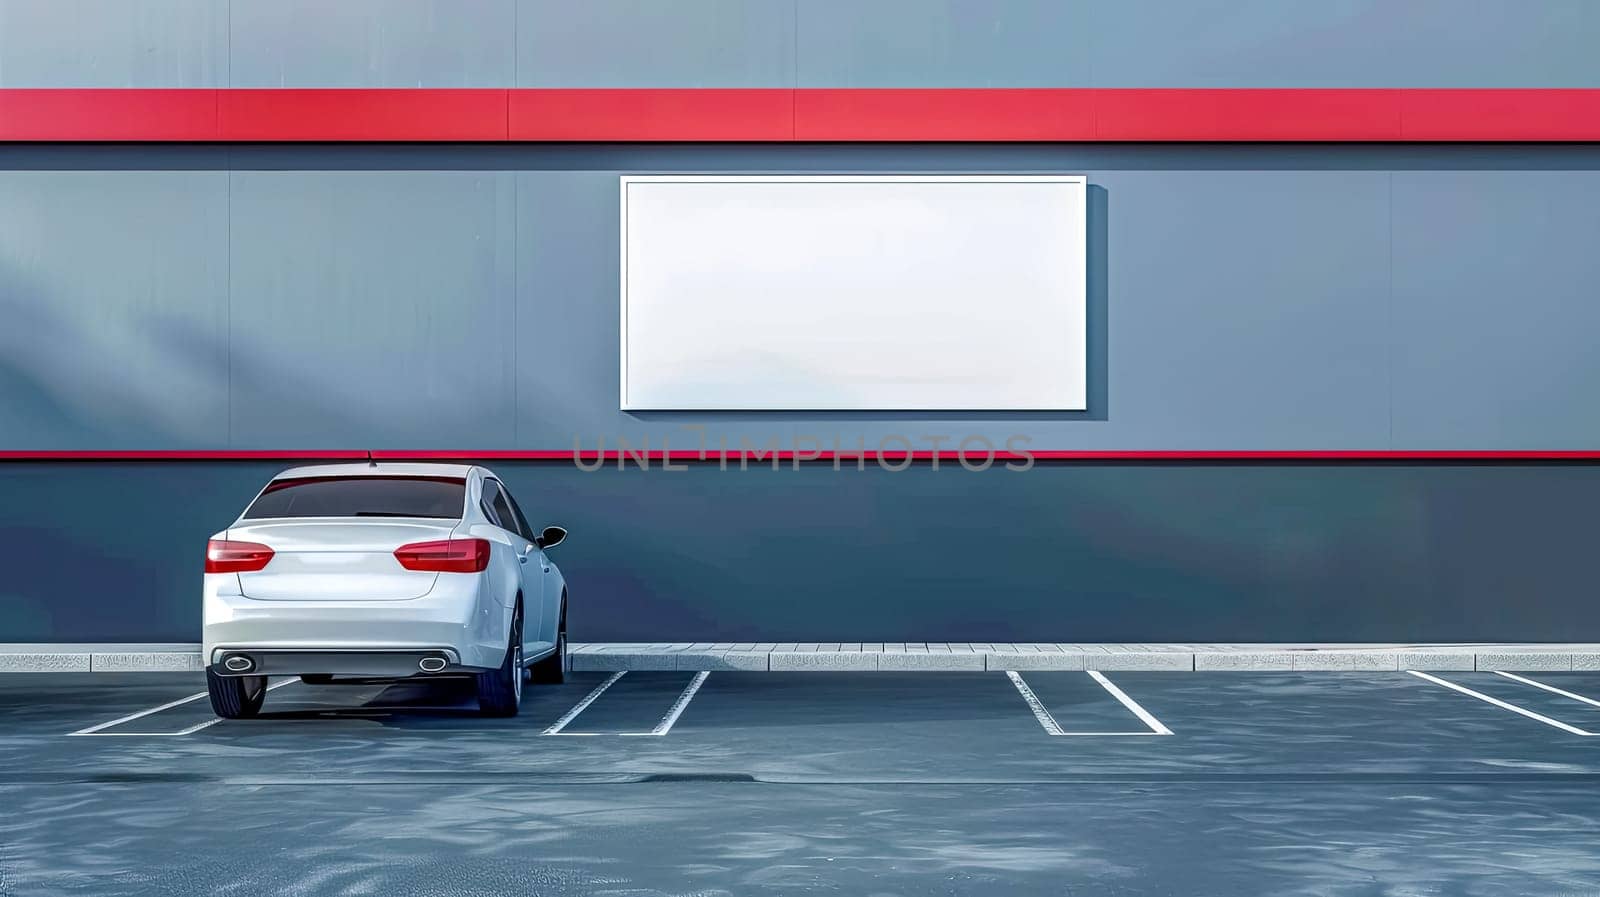 White Sedan Parked in Empty Parking Lot with Blank Billboard by Edophoto